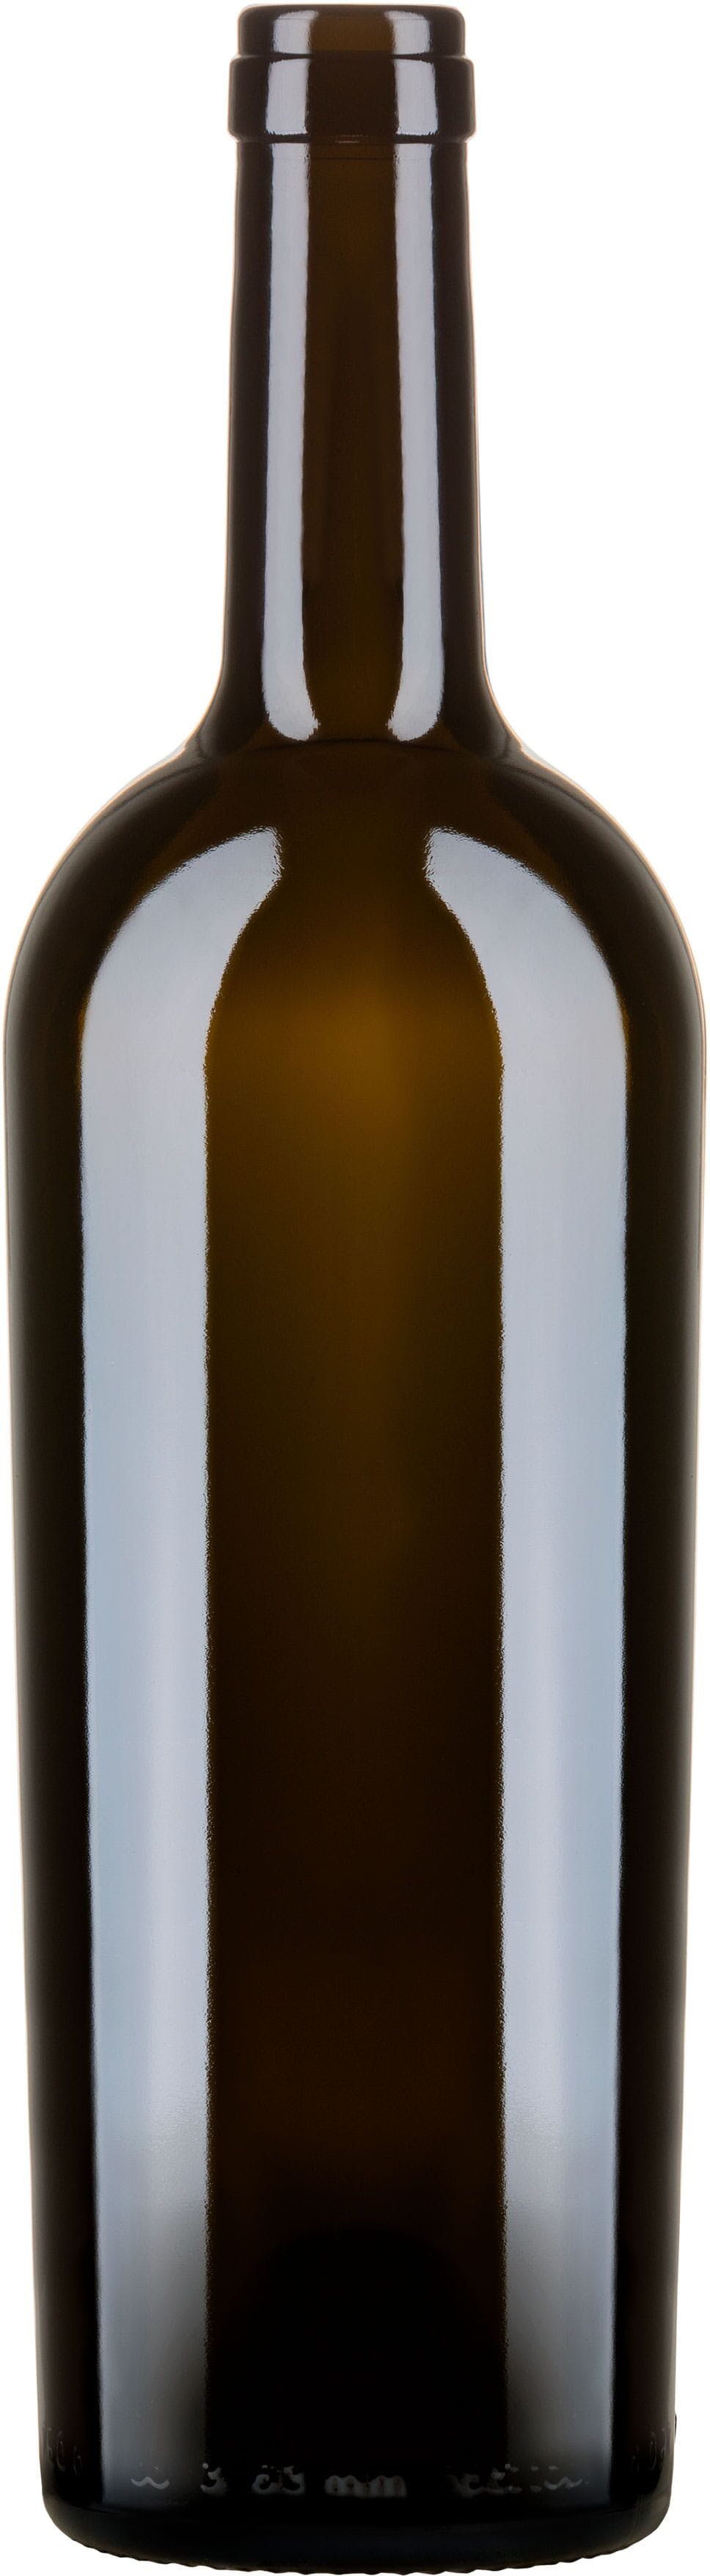 Flasche Bordeaux   JUMBO 750 ml BG-Korken